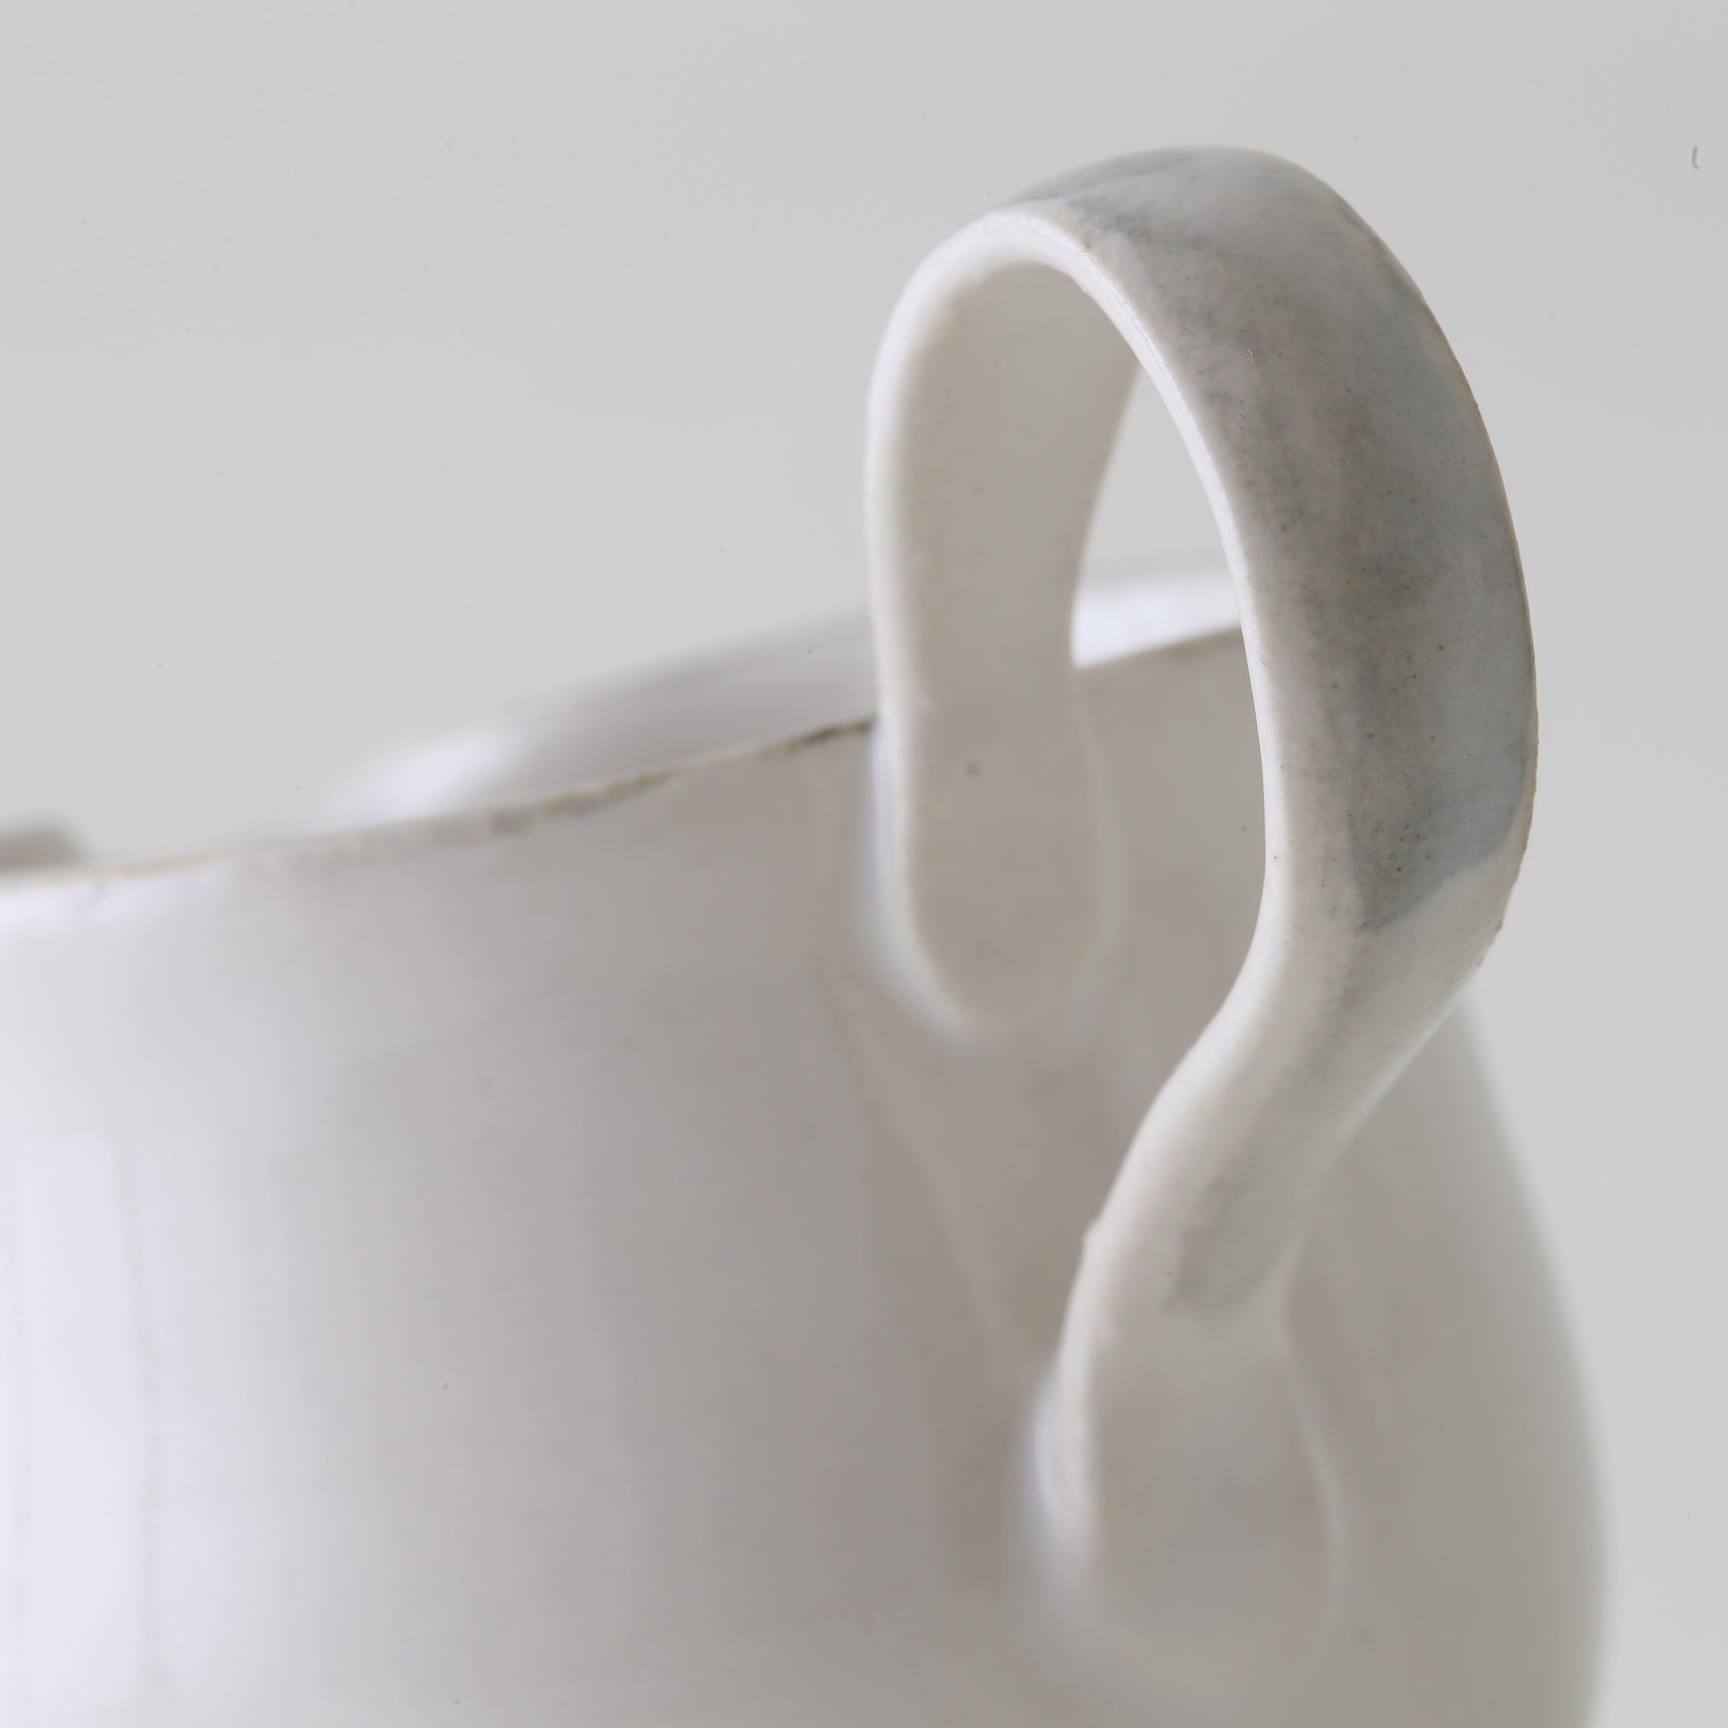 wakako ceramics/ことりミルクピッチャー